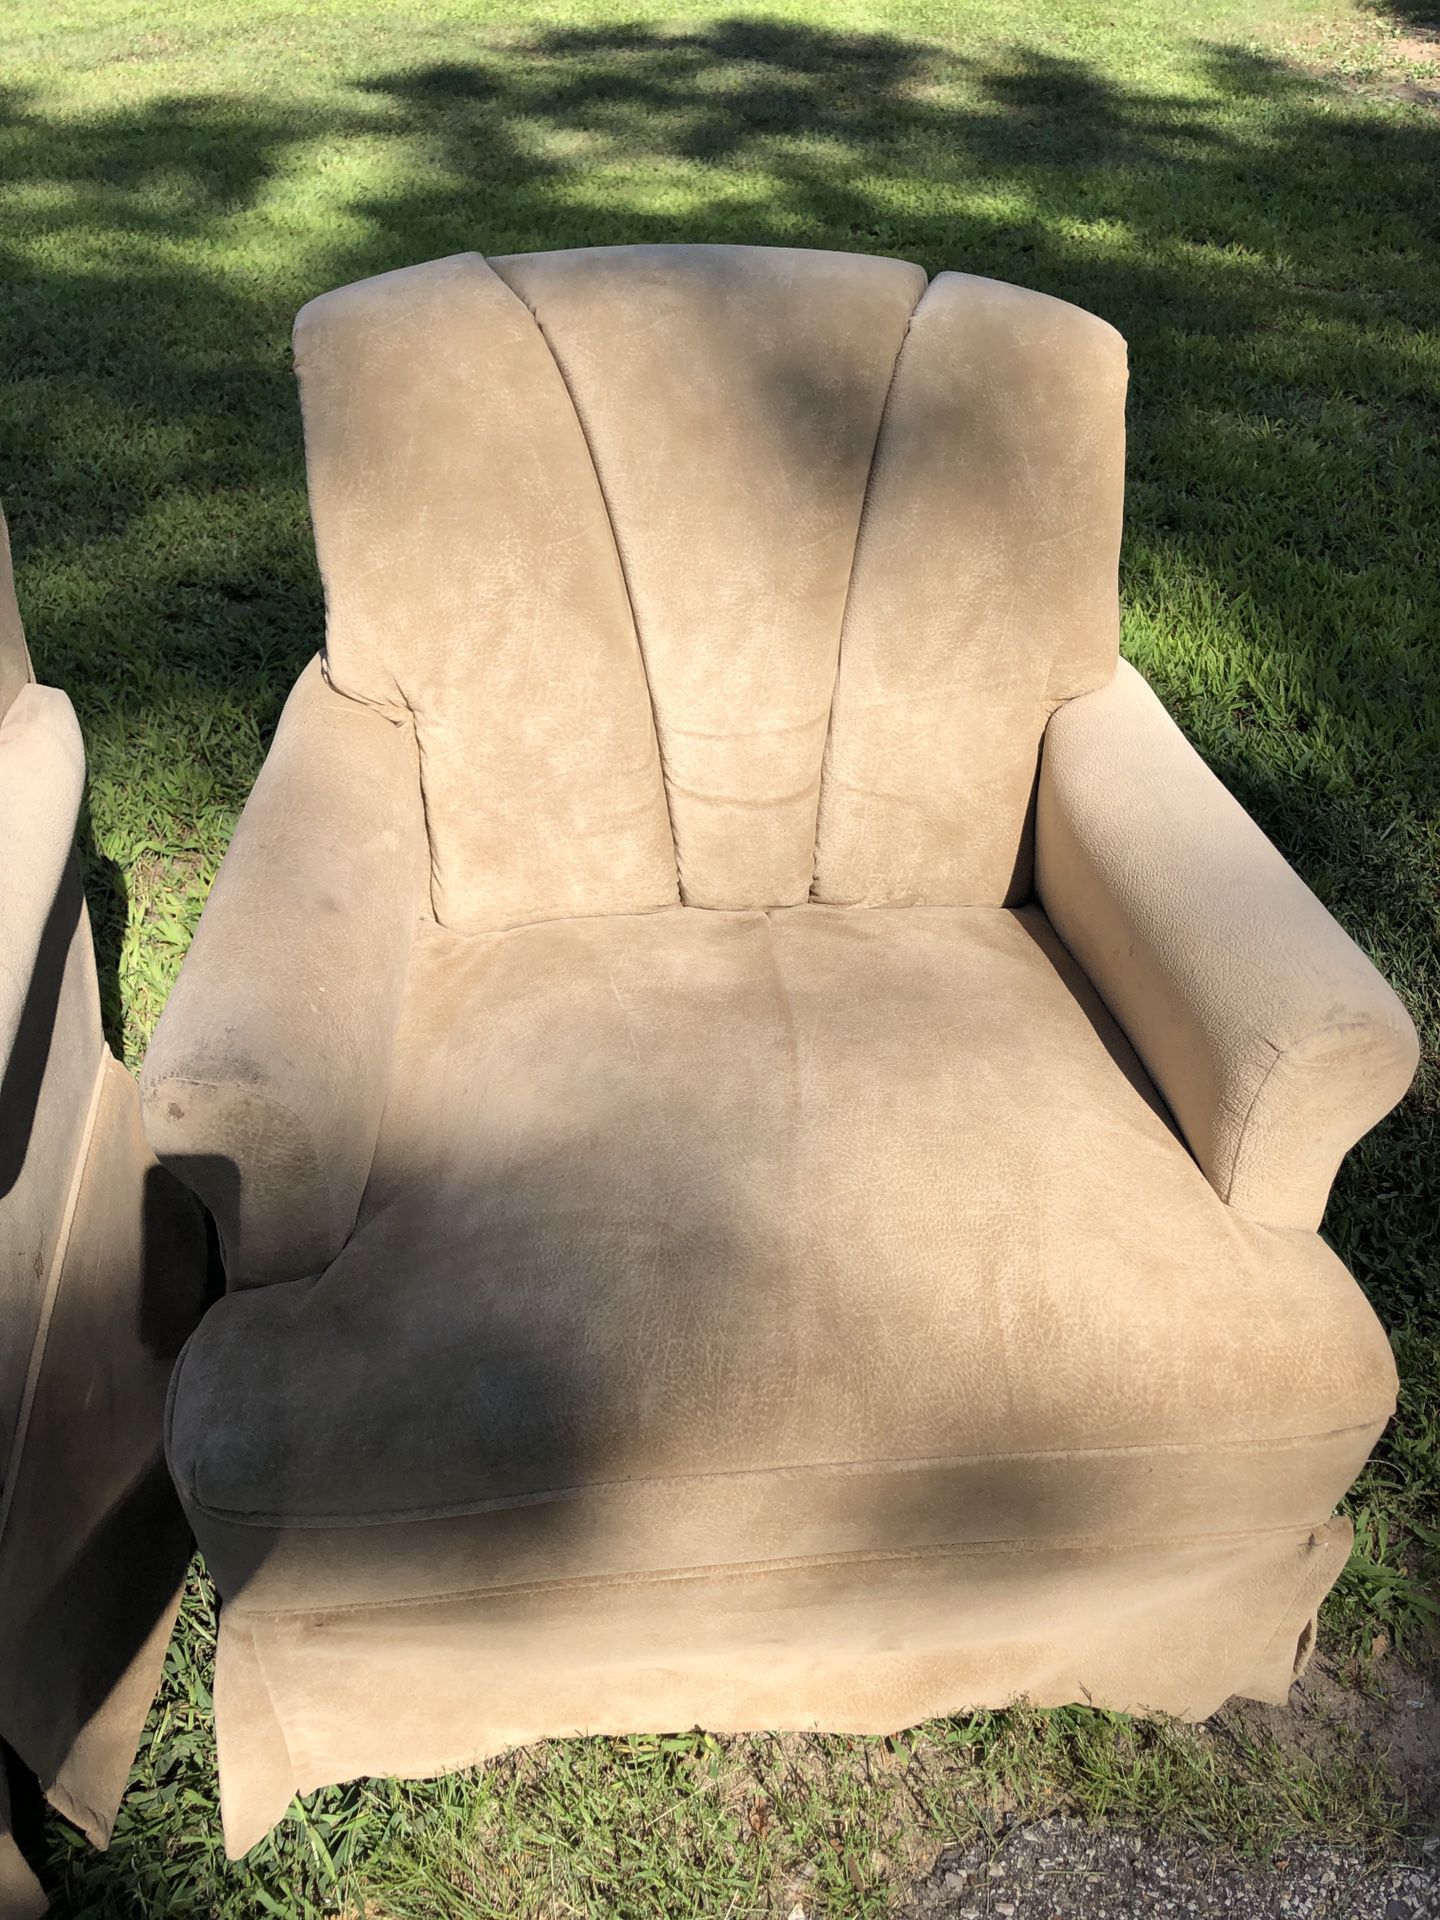 RV Camper Chairs